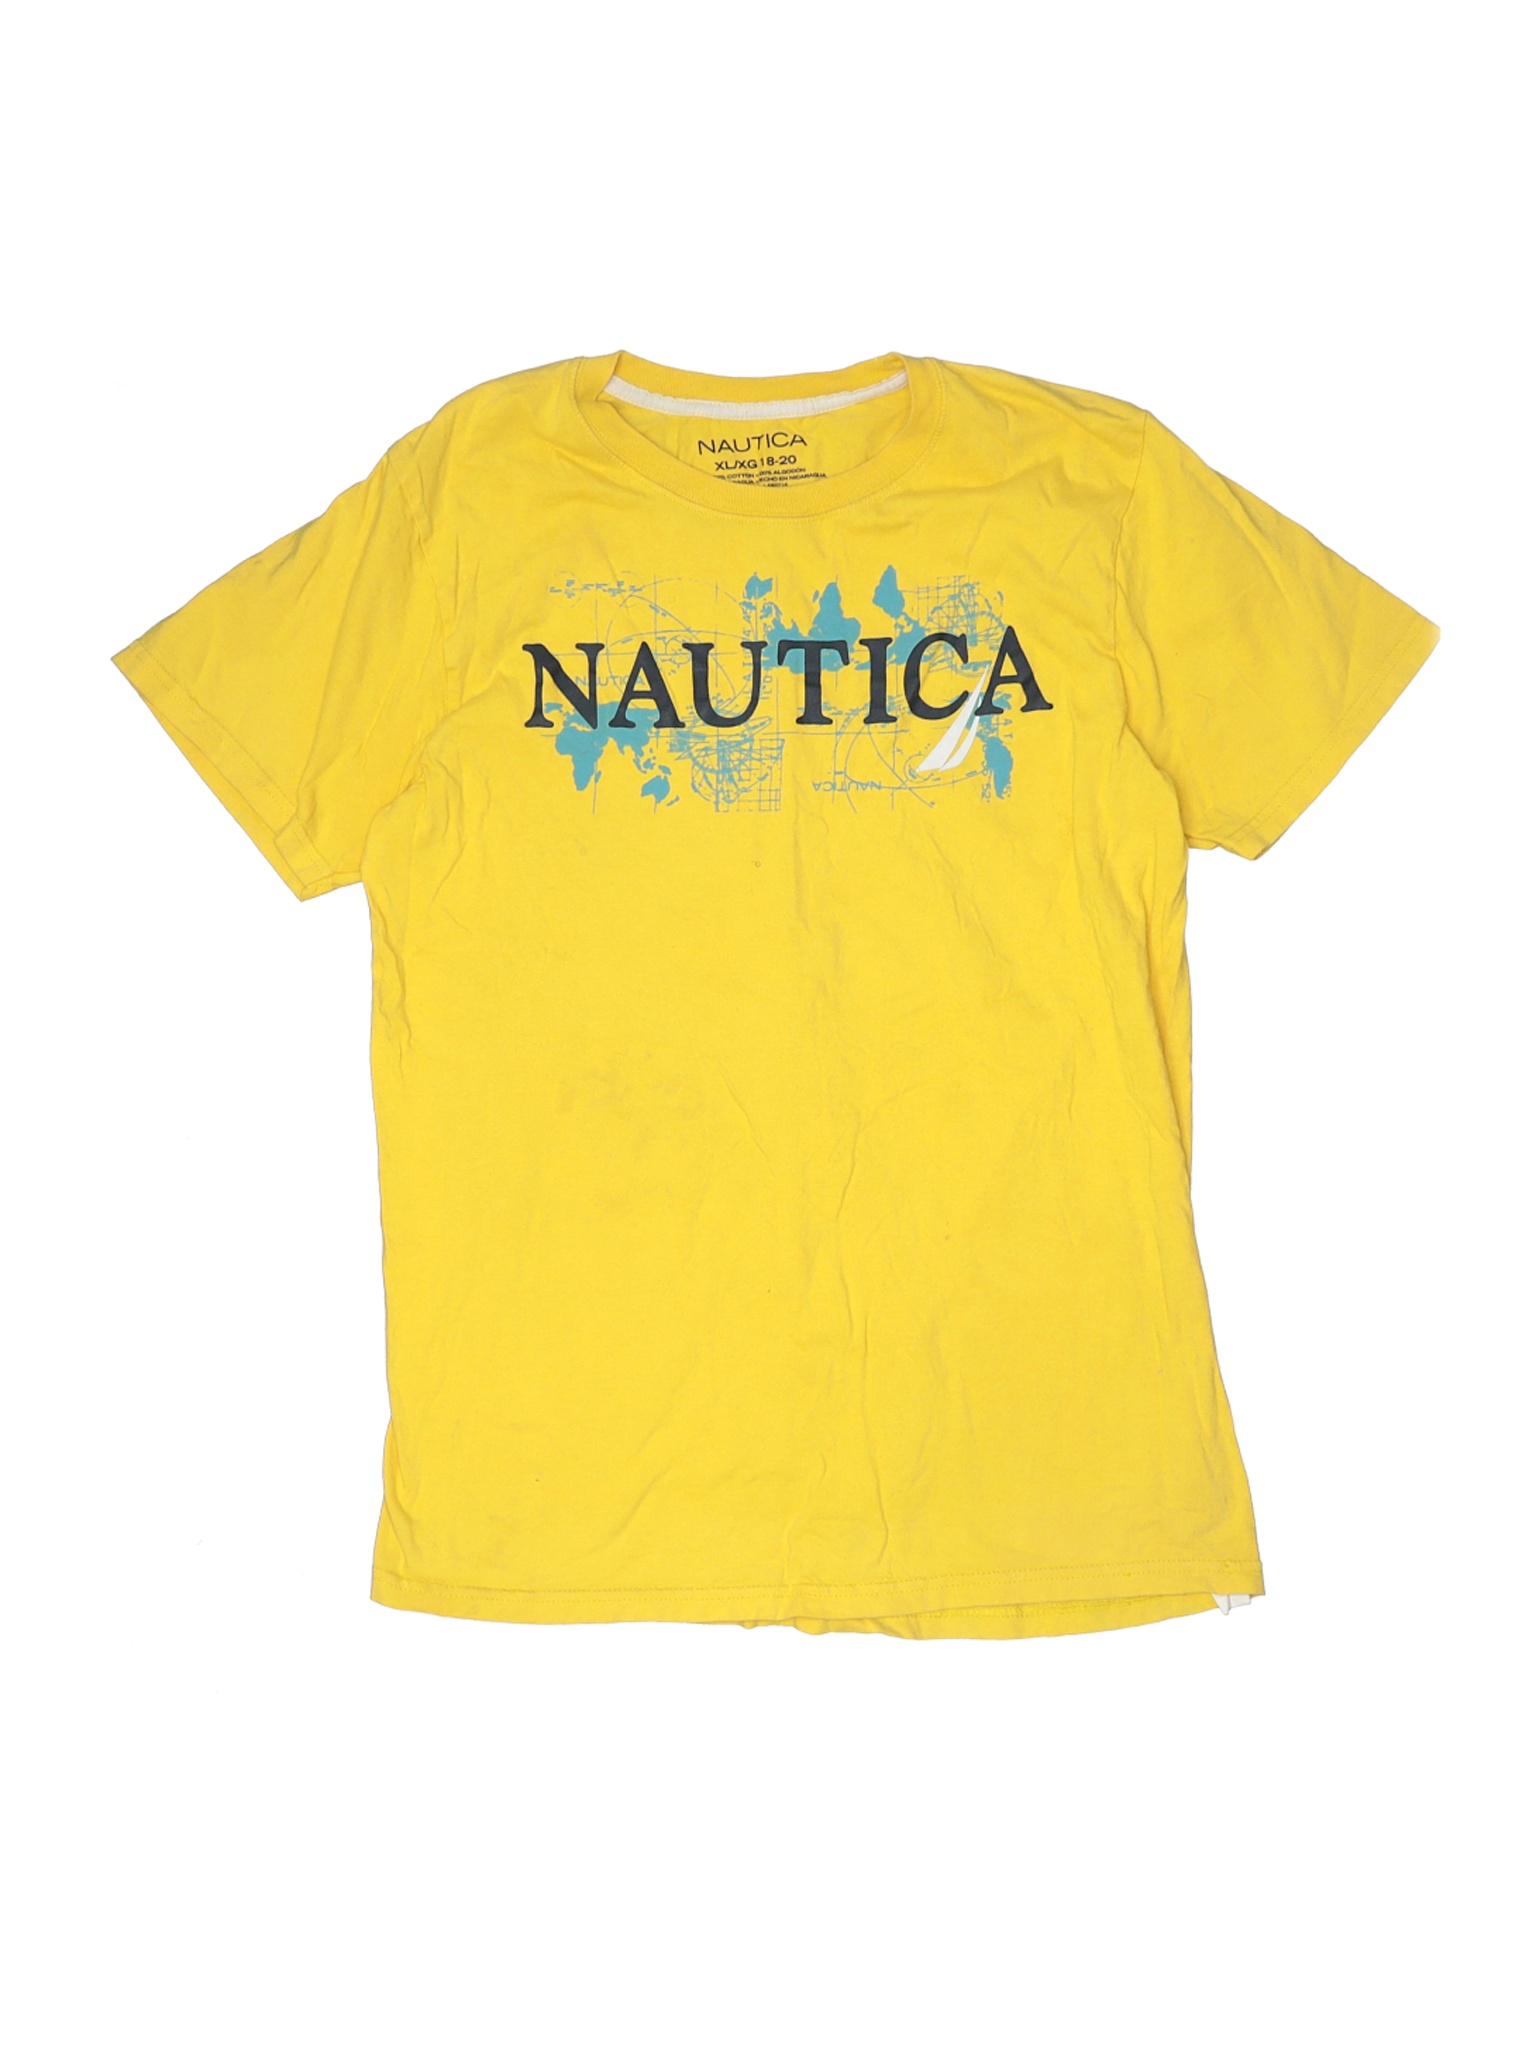 Nautica Boys Yellow Short Sleeve T-Shirt 18 | eBay